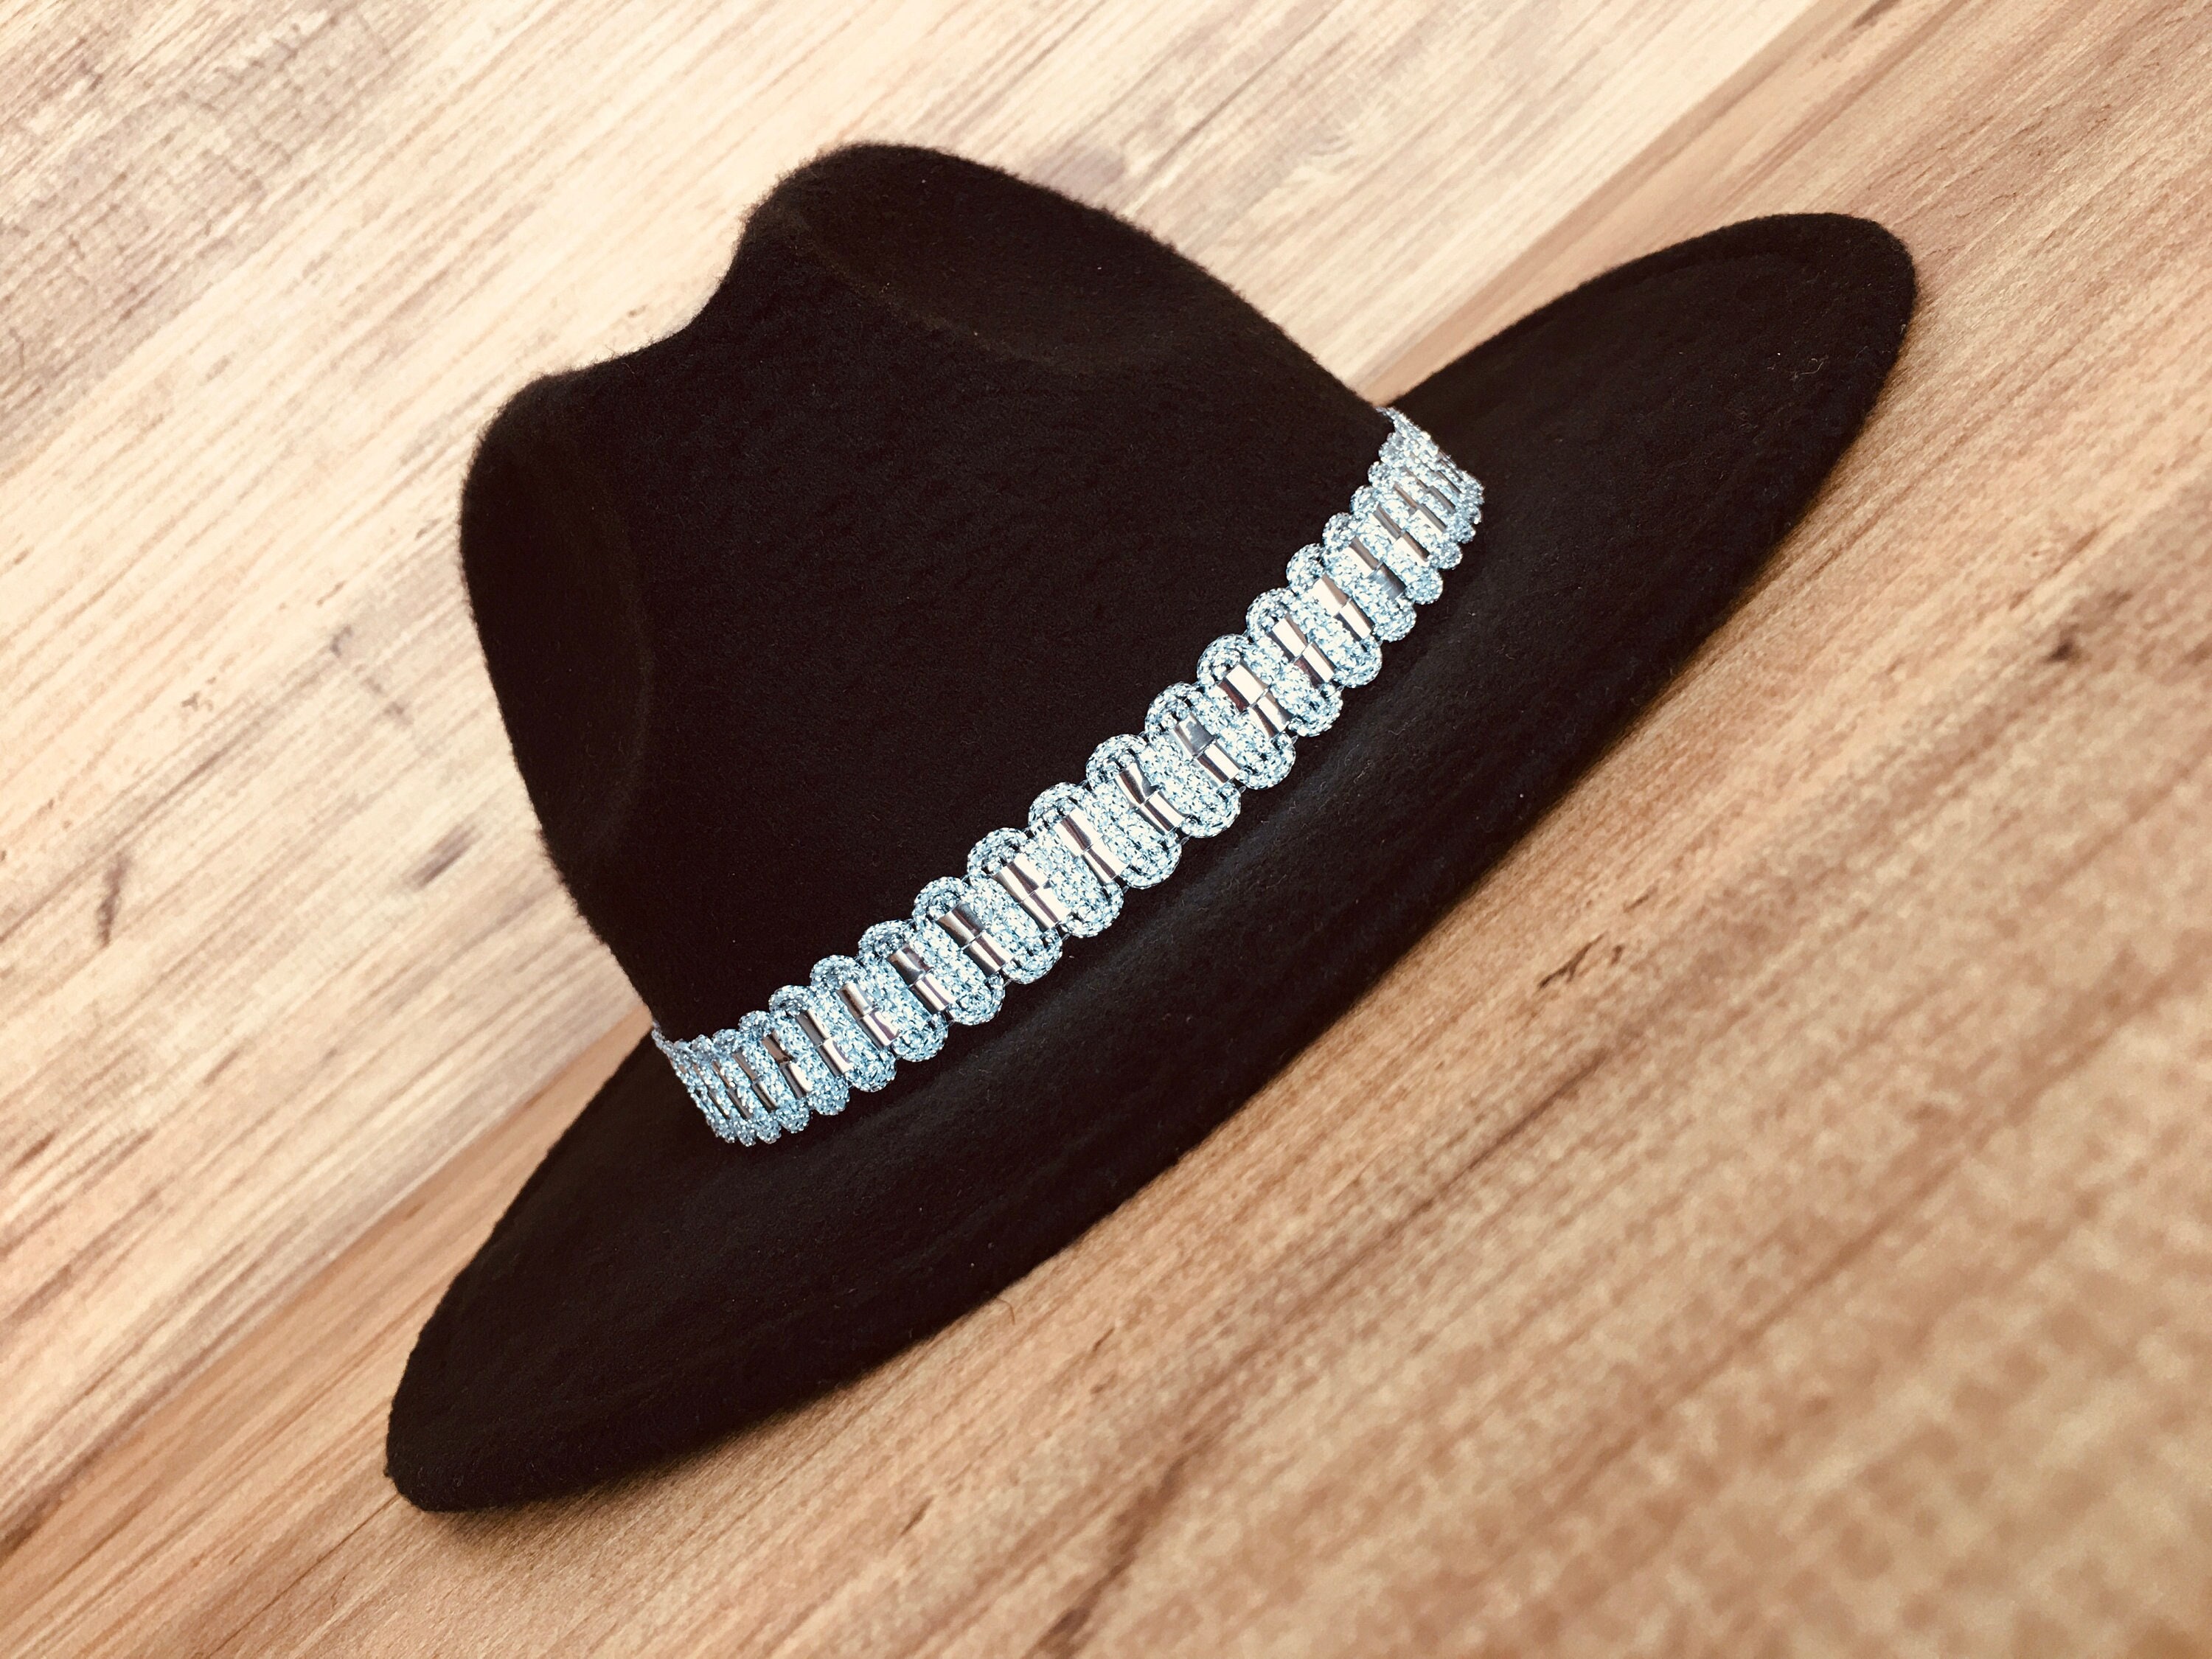 Hatbands for Fedora Hats Cowboy Hat Band Western Hatband 